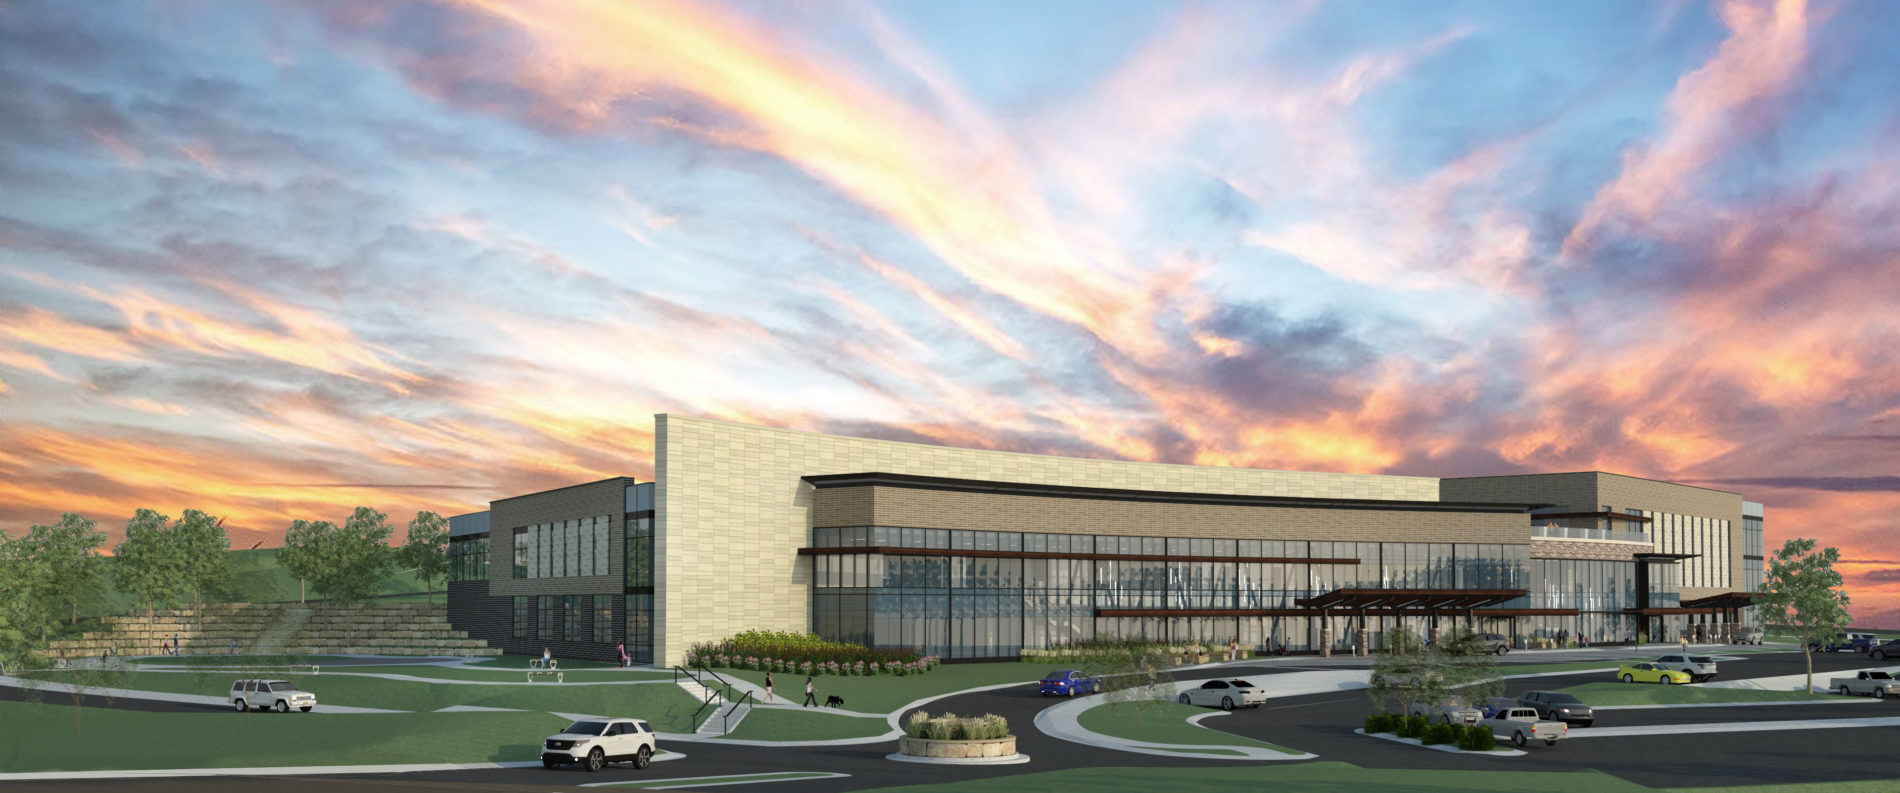 Lawrence Memorial Health center rendering